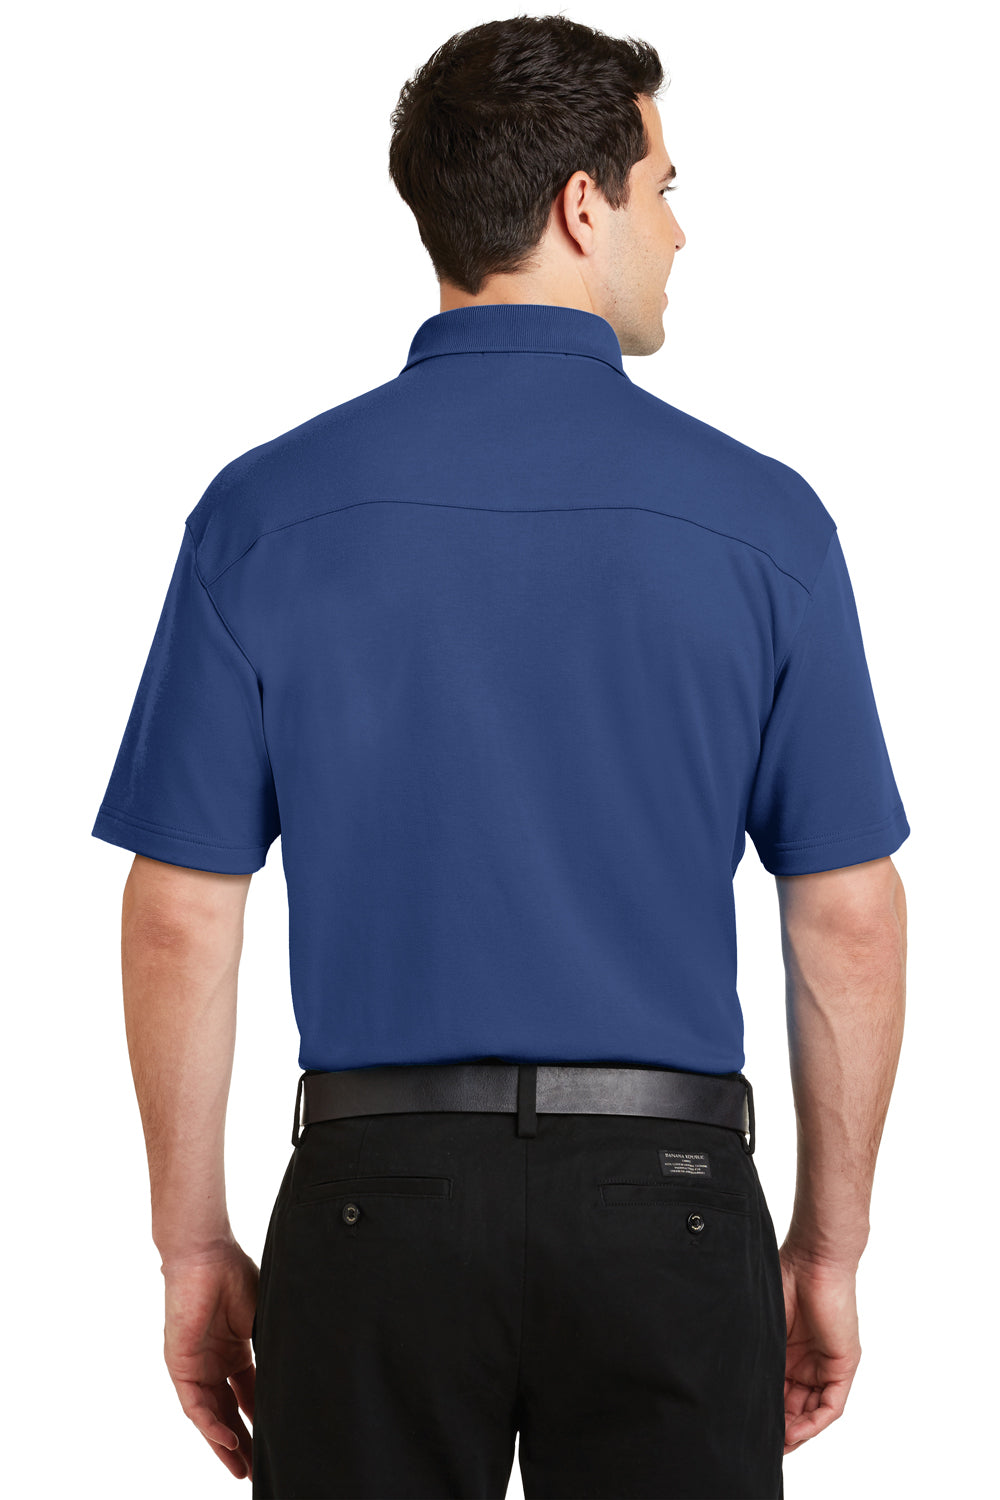 Port Authority K5200 Mens Silk Touch Performance Moisture Wicking Short Sleeve Polo Shirt Royal Blue Back